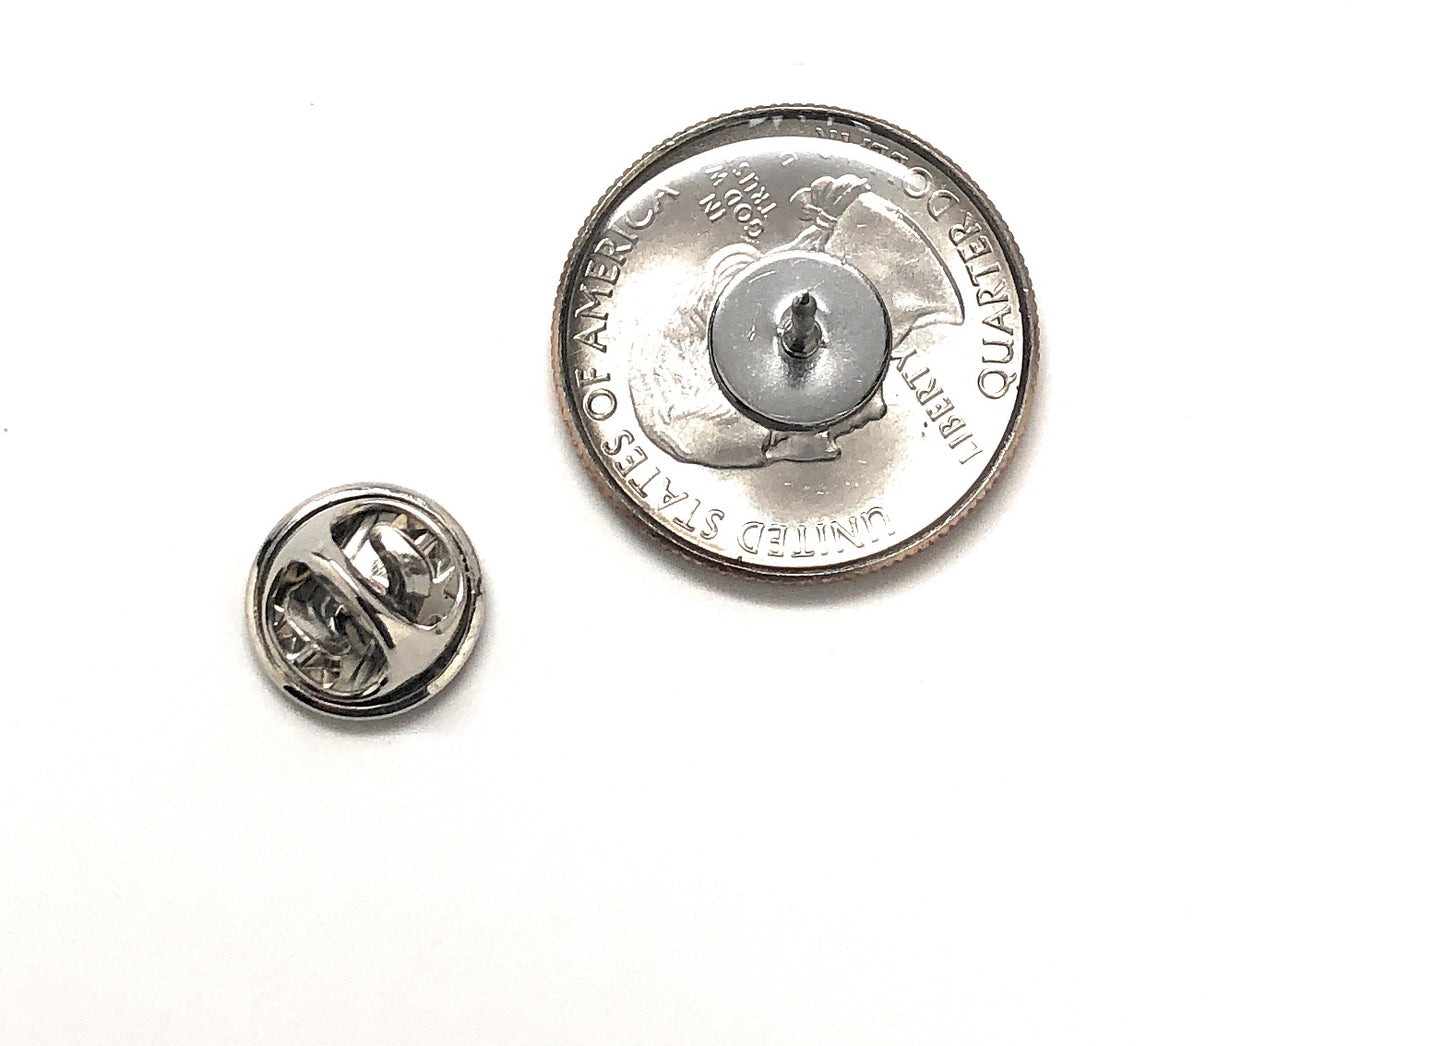 Marsh-Billings-Rockefeller National Historical Park Coin Lapel Pin Uncirculated U.S. Quarter 2020 Tie Pin